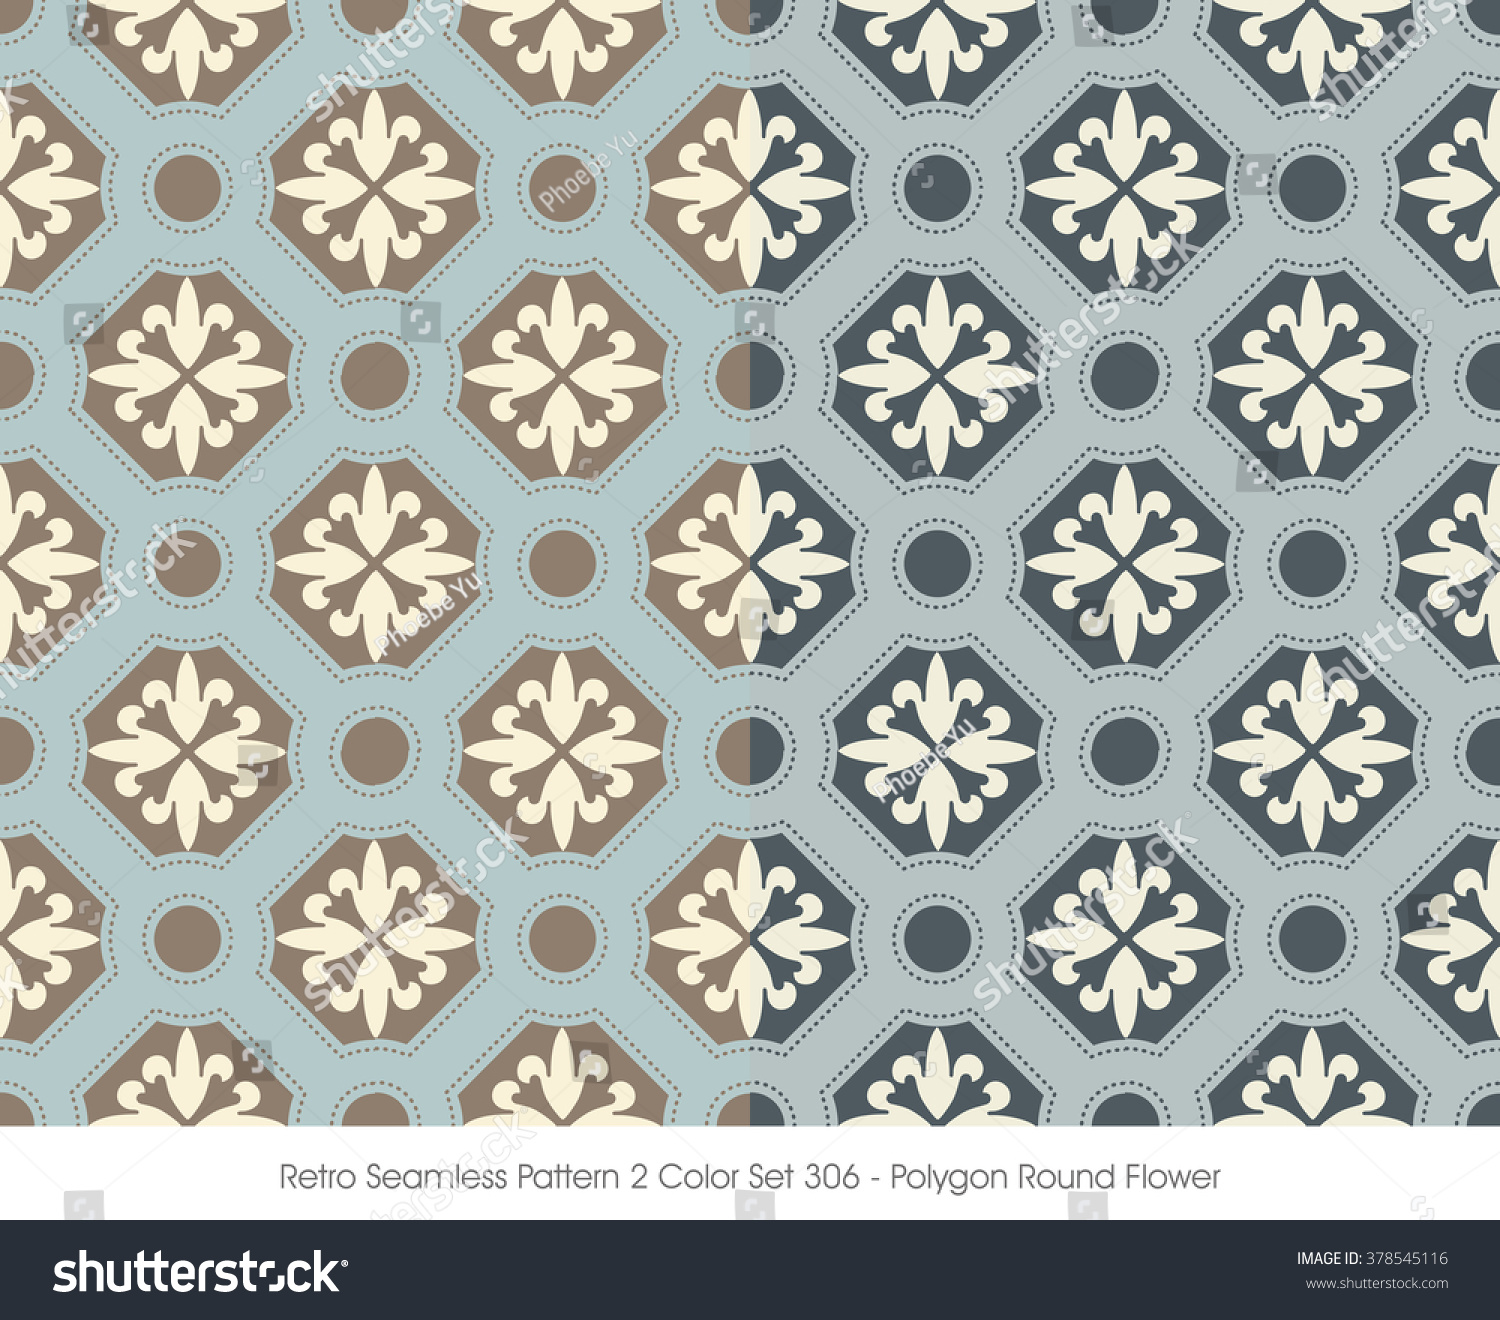 SVG of Retro Seamless Pattern 2 Color Set_306 Polygon Round Flower
 svg